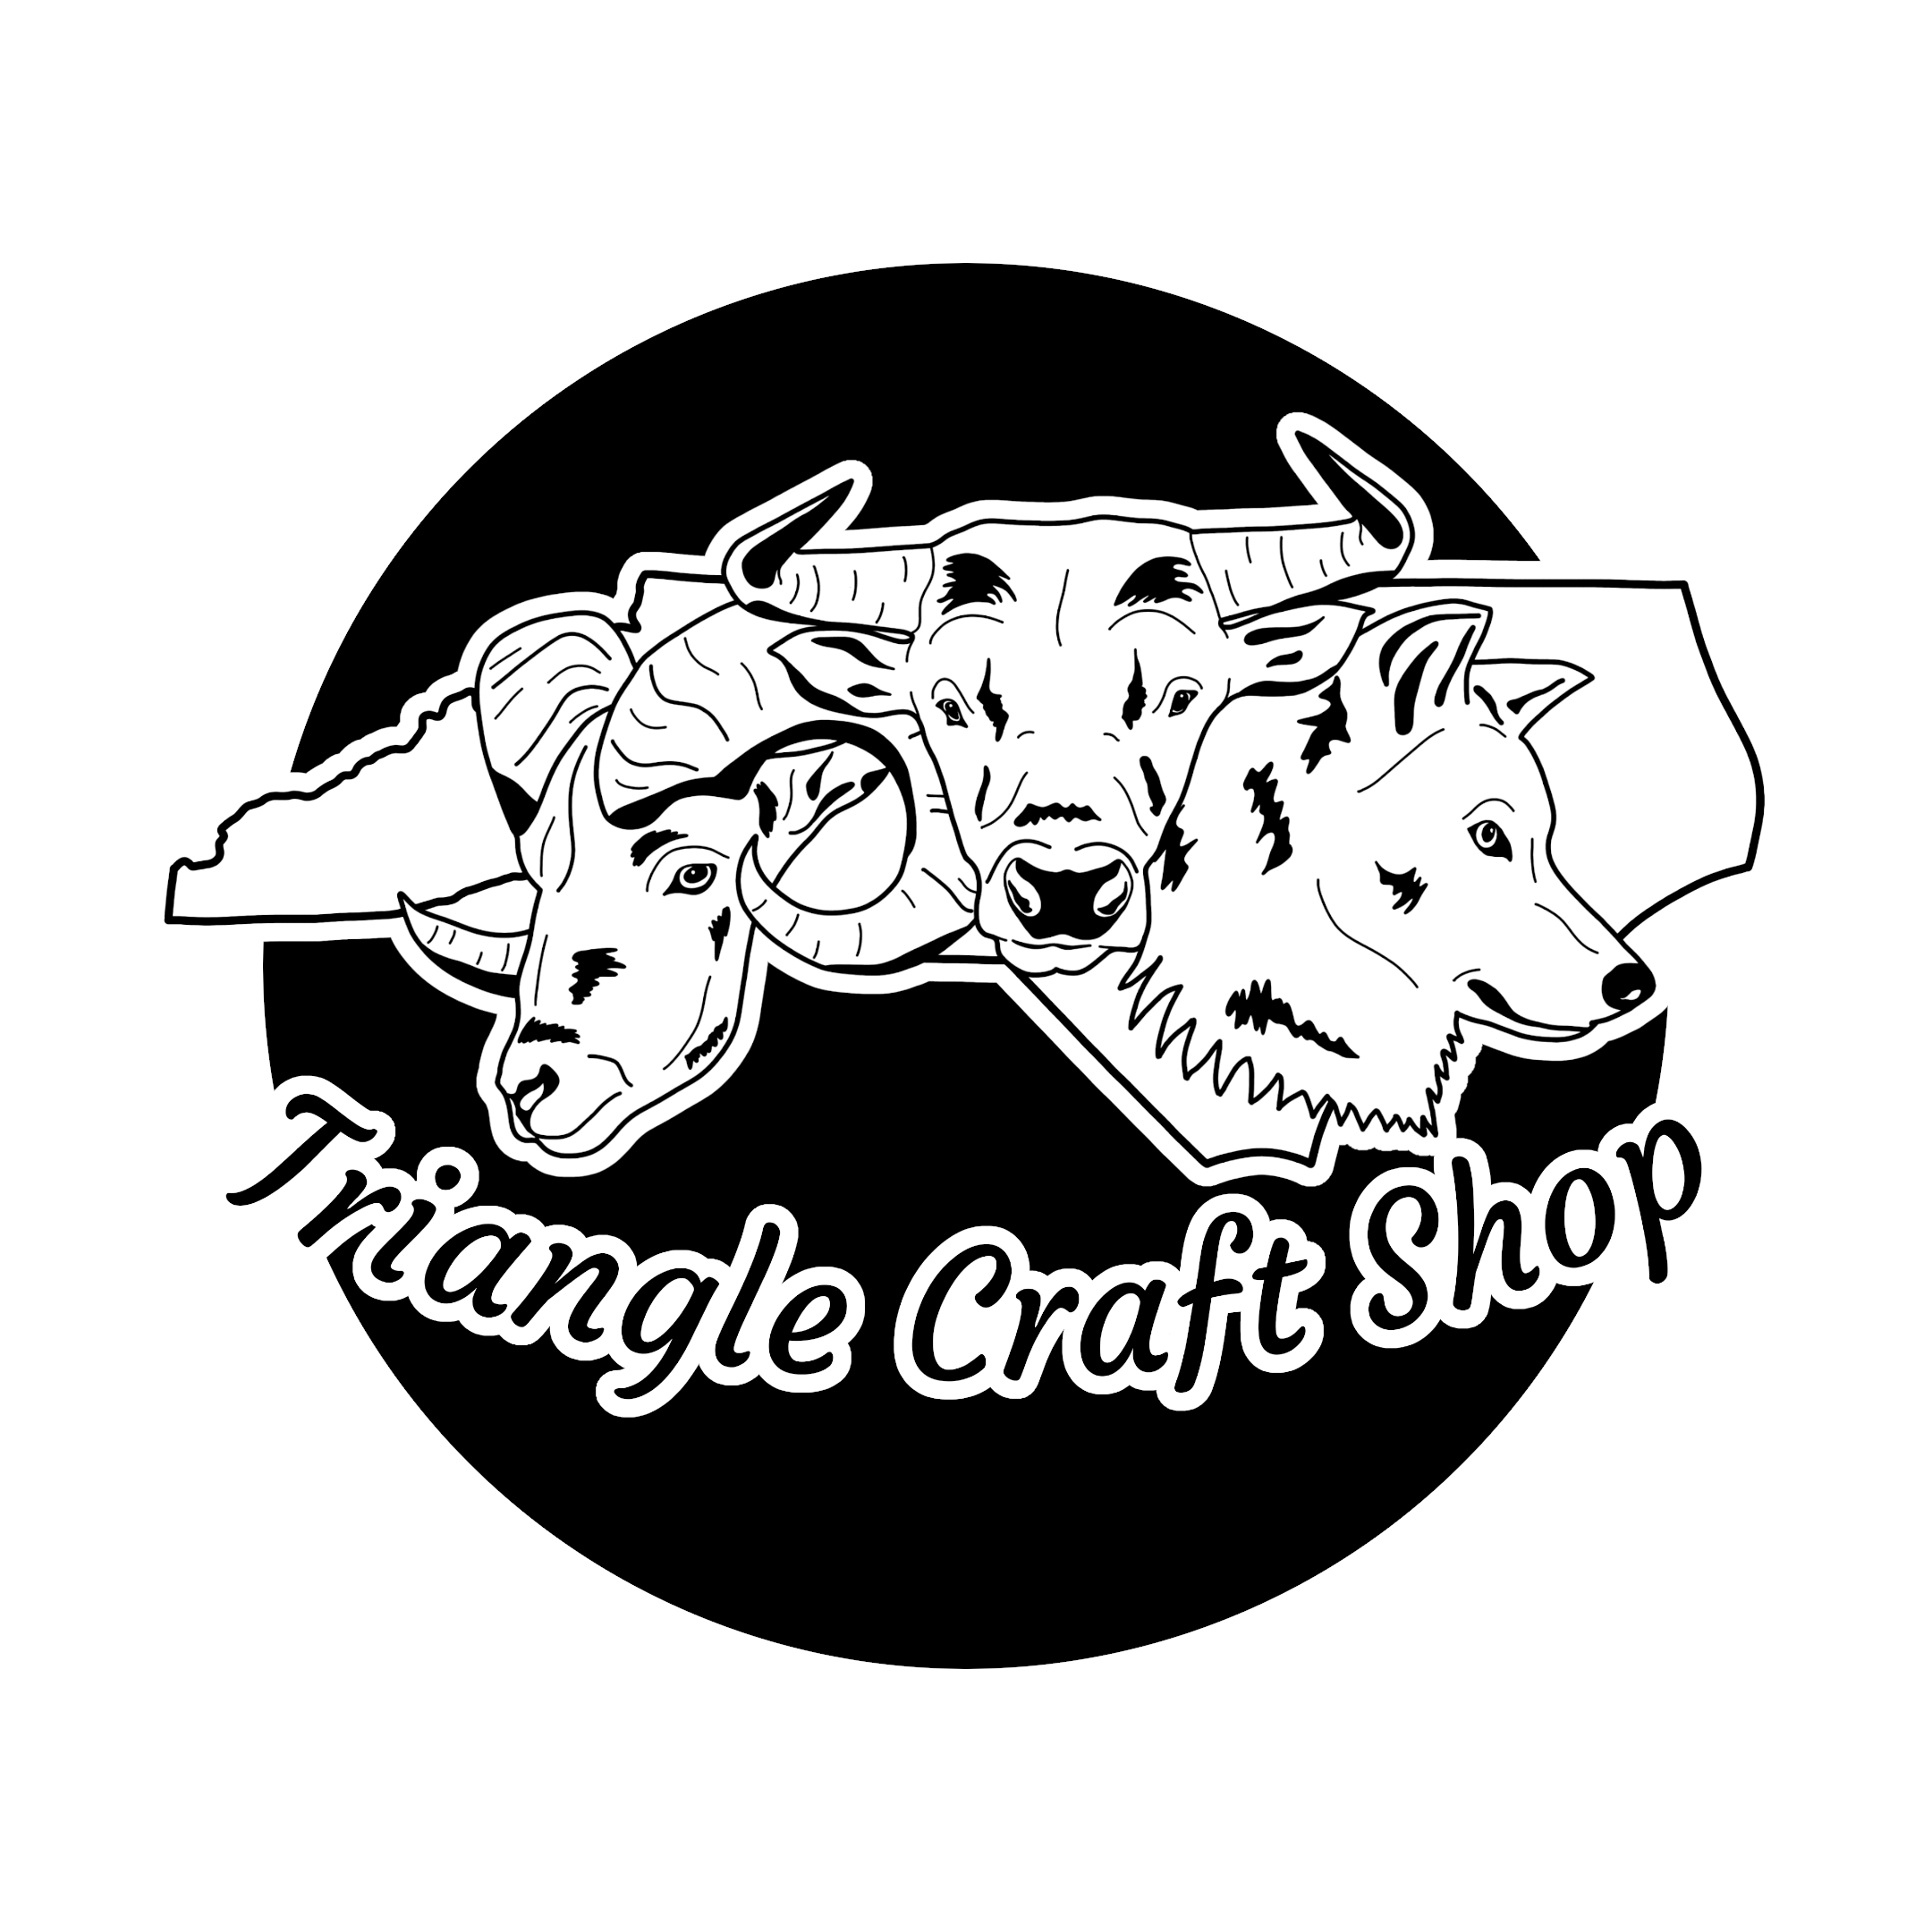 Triangle Craft Shop